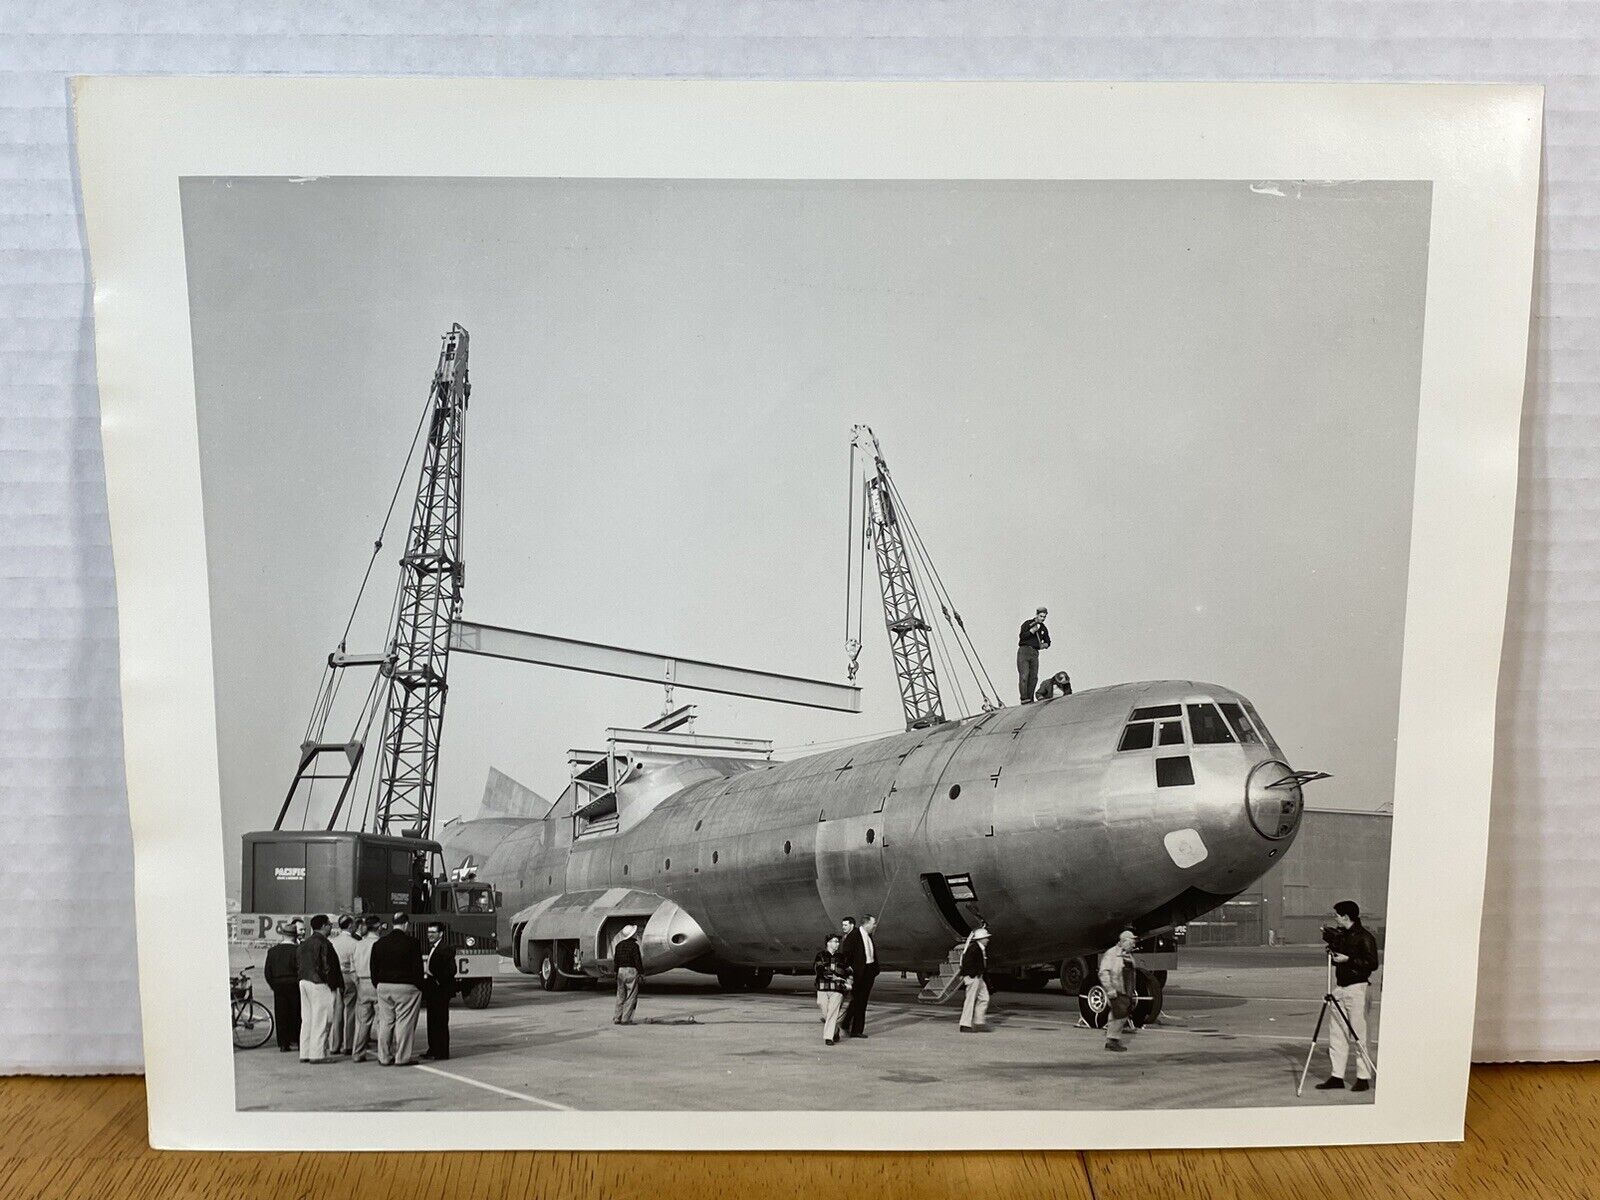 Douglas C-133 Cargomaster Cargo Aircraft Being Built. Vintage